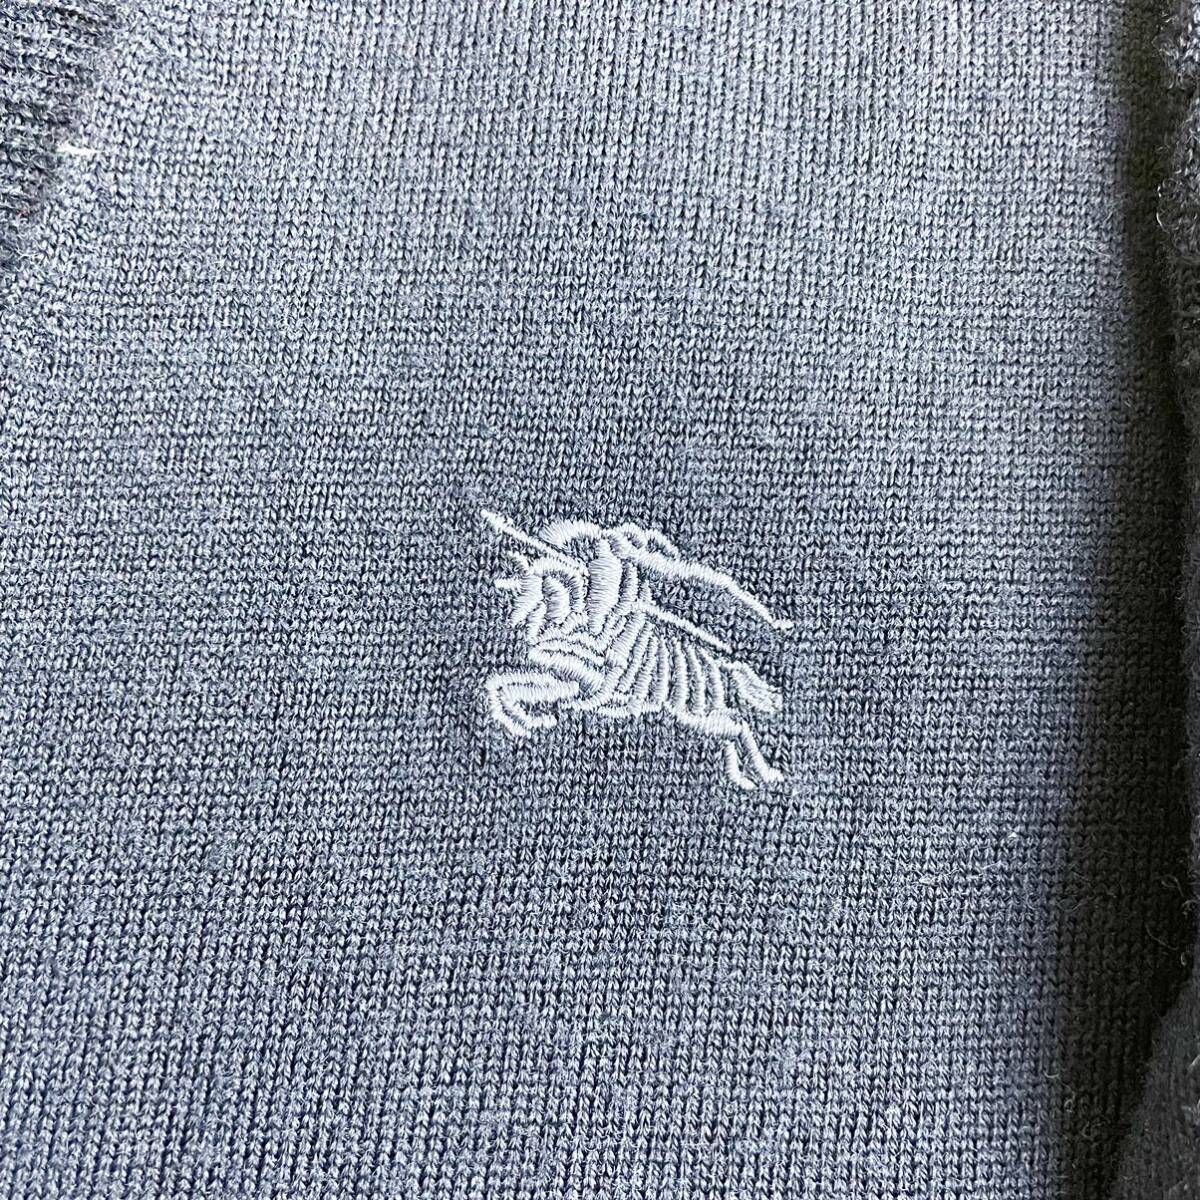 [E11]BURBERRY BLACK LABEL Burberry Black Label cardigan long sleeve knitted hose Logo noba check navy blue navy 4 XL size 